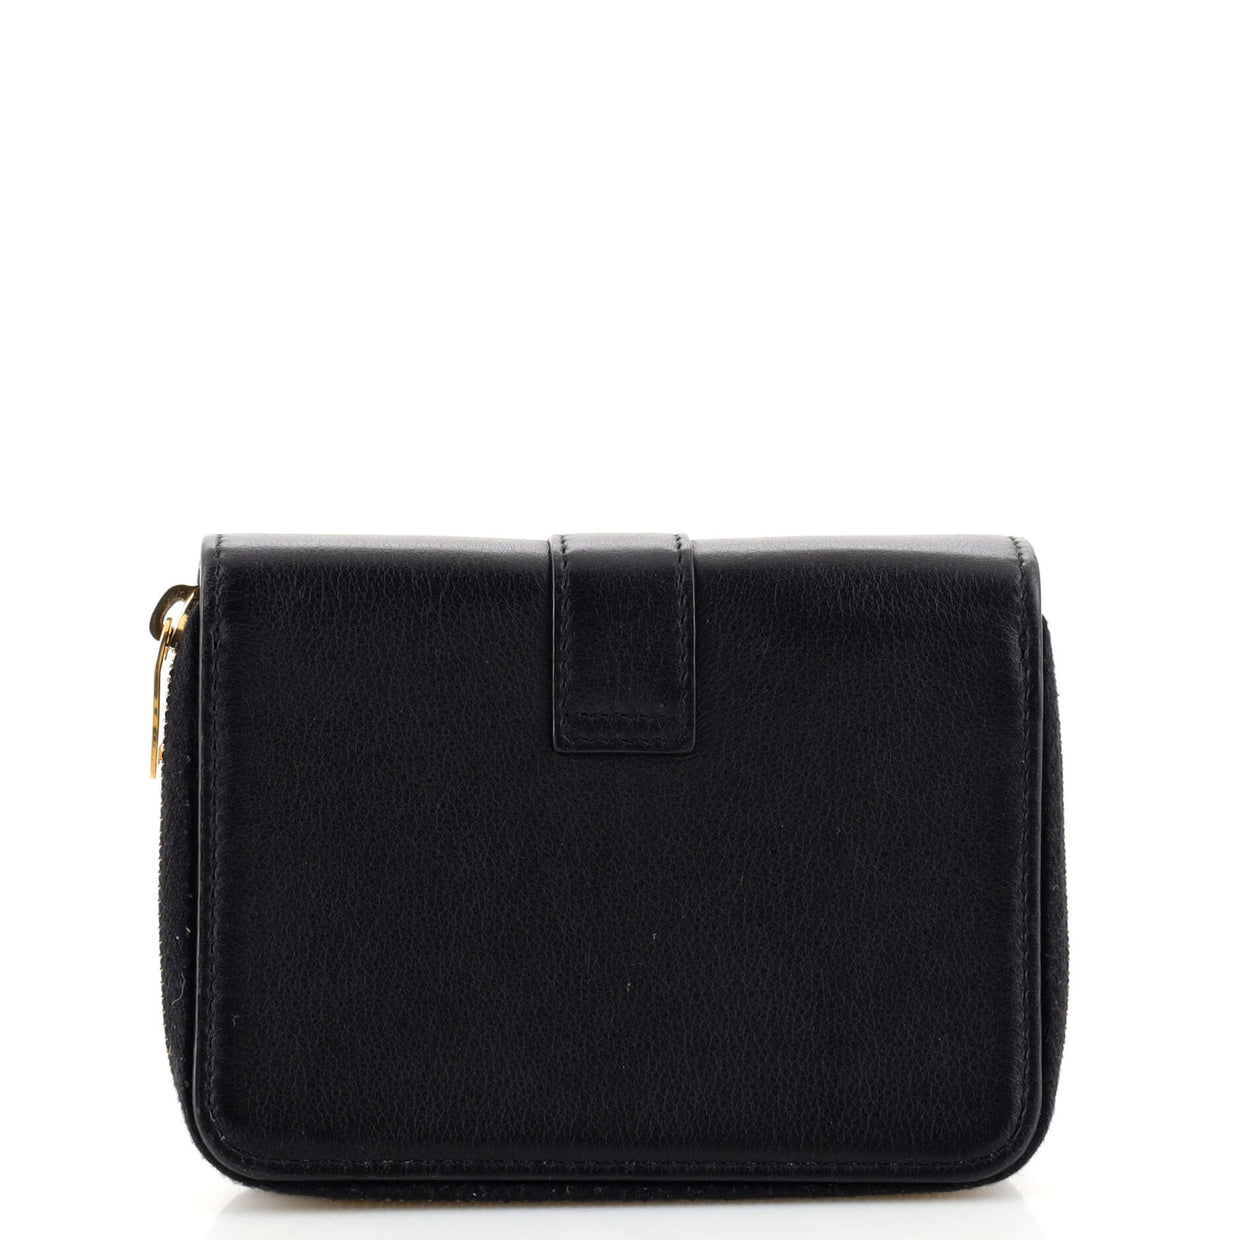 Saint Laurent Line Zip Wallet Leather Compact Black 1871602